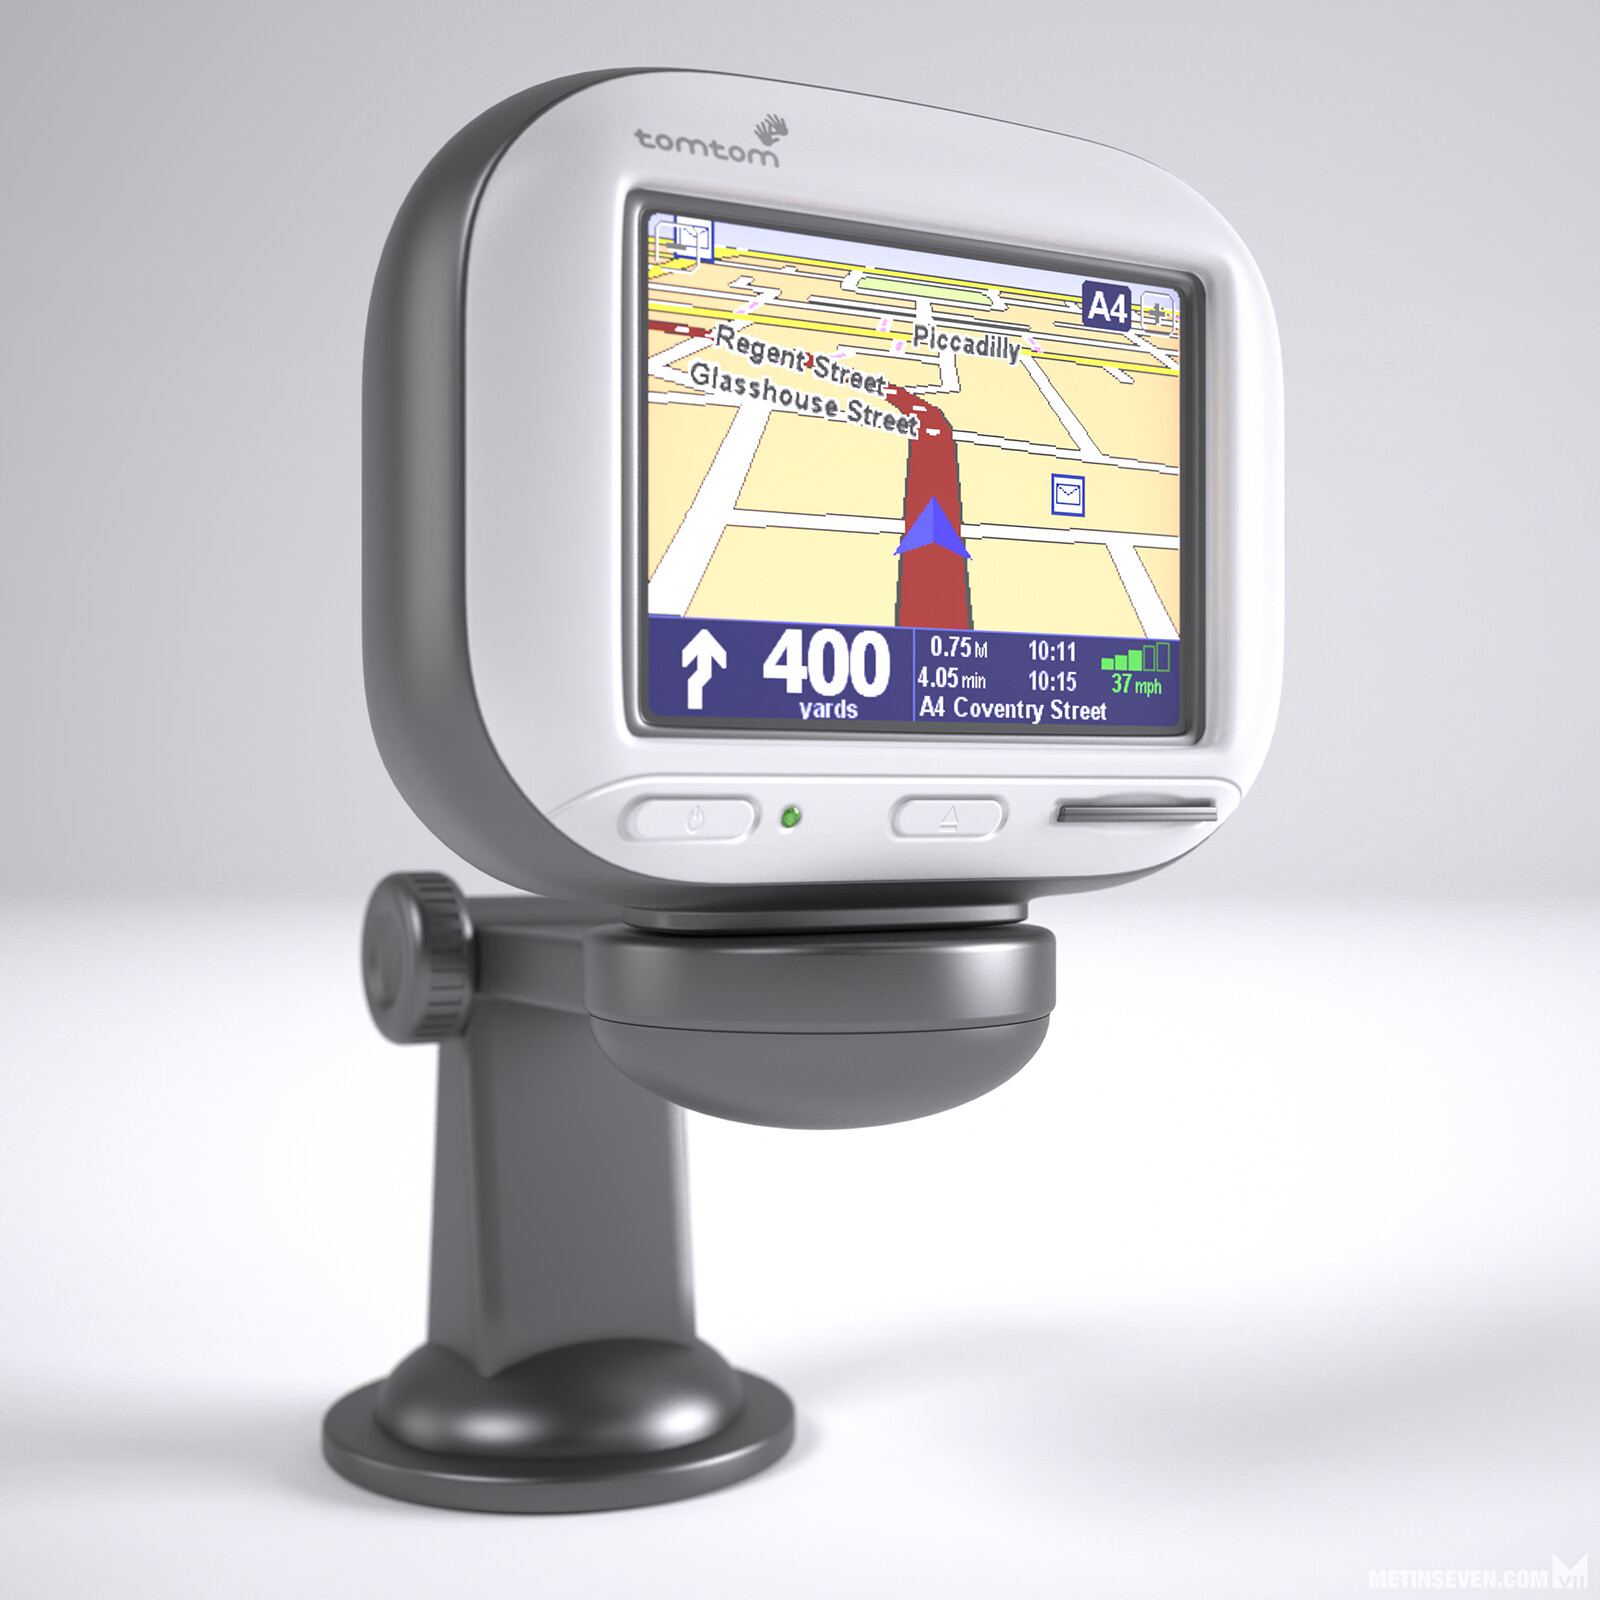 3D visualization of the old TomTom Go 500 car navigation system